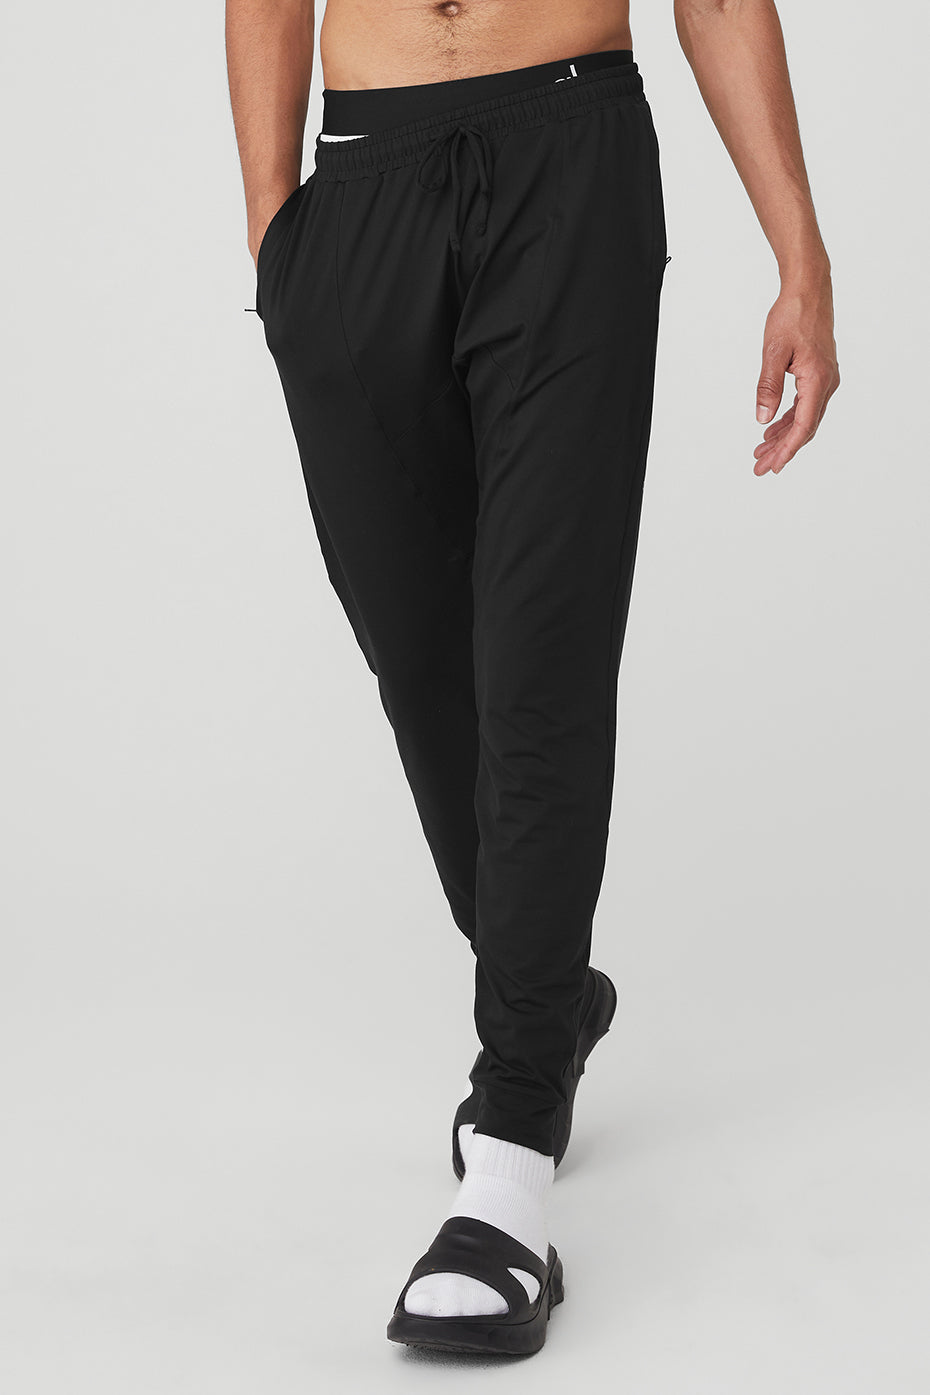  Nike Yoga Men's Pants (Large, Black/Iron Grey